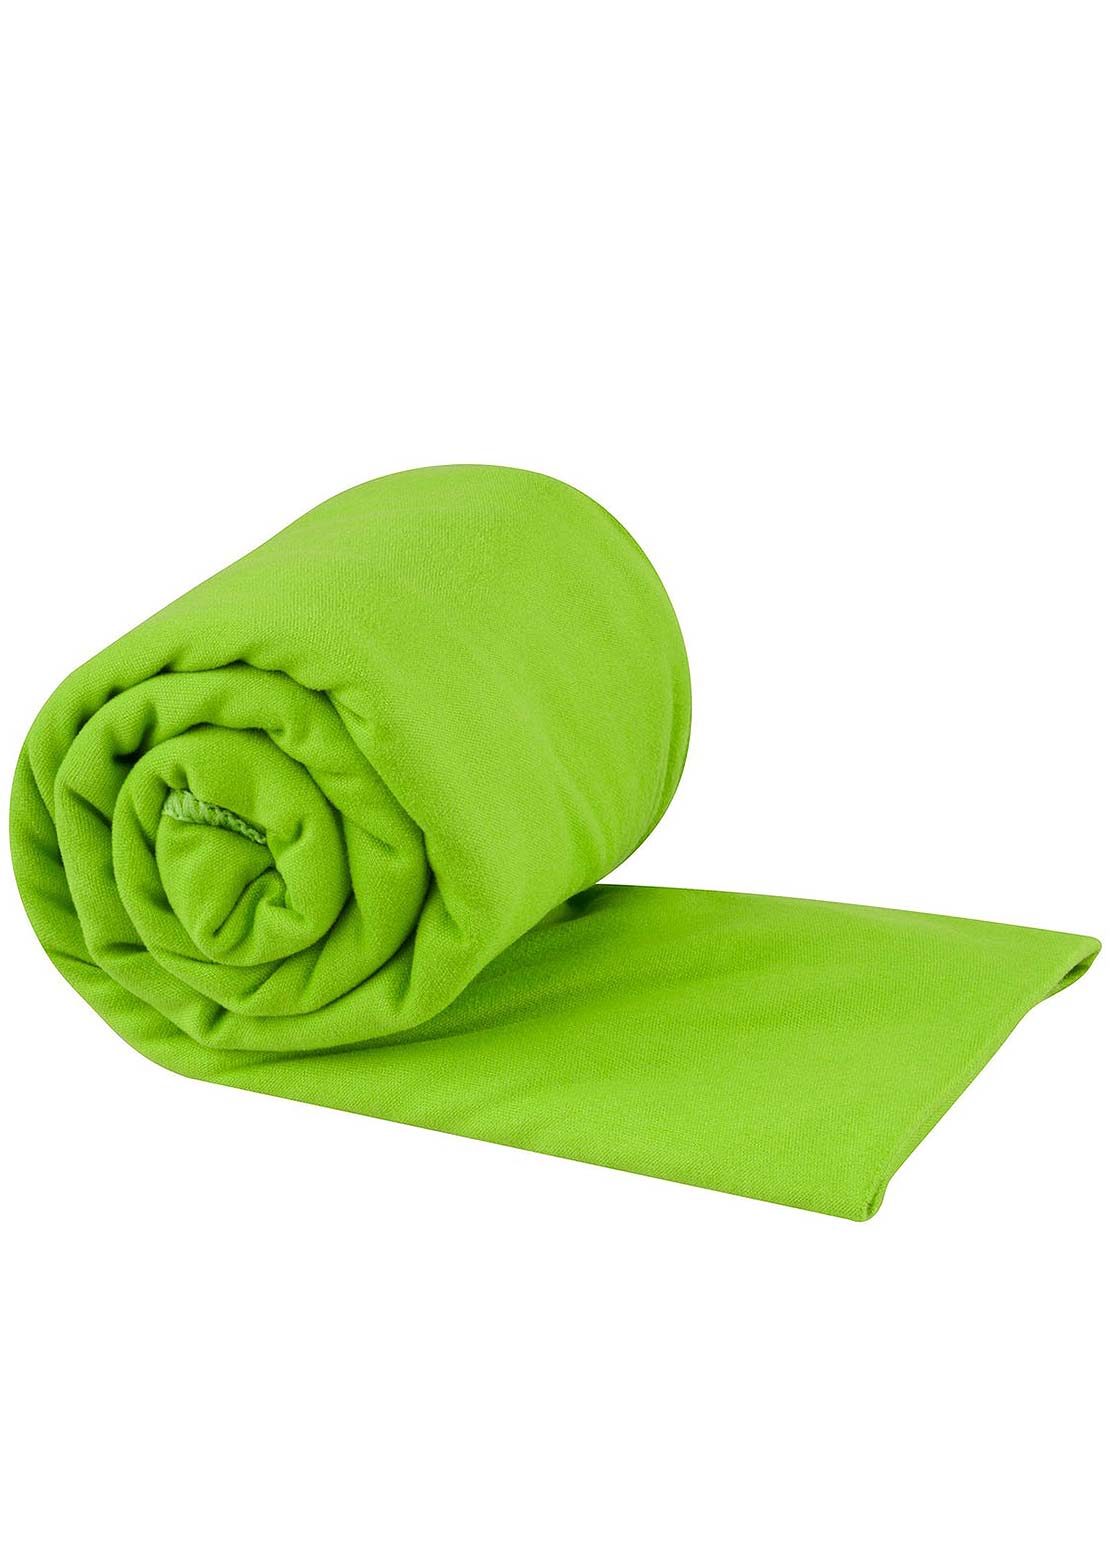 Sea To Summit Pocket Towel - 30 x 60 Lime GREEN